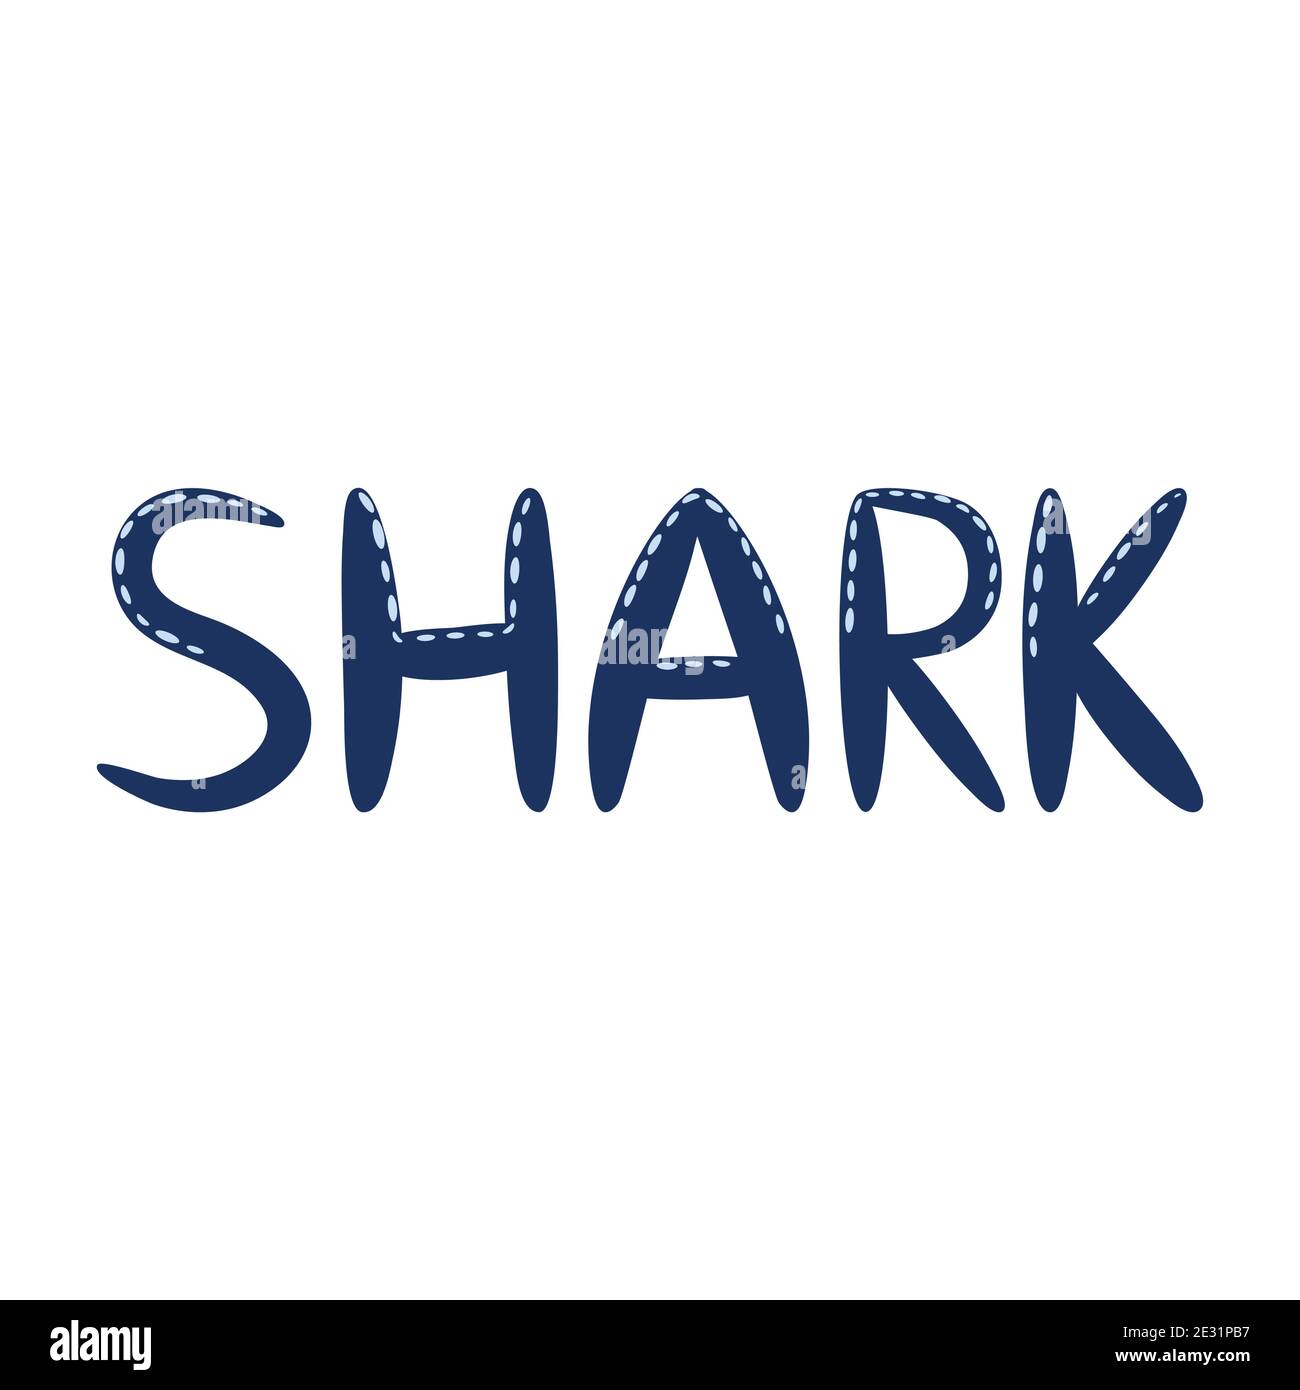 shark-lettering-letters-in-scandinavian-style-hand-drawn-stock-vector-image-art-alamy